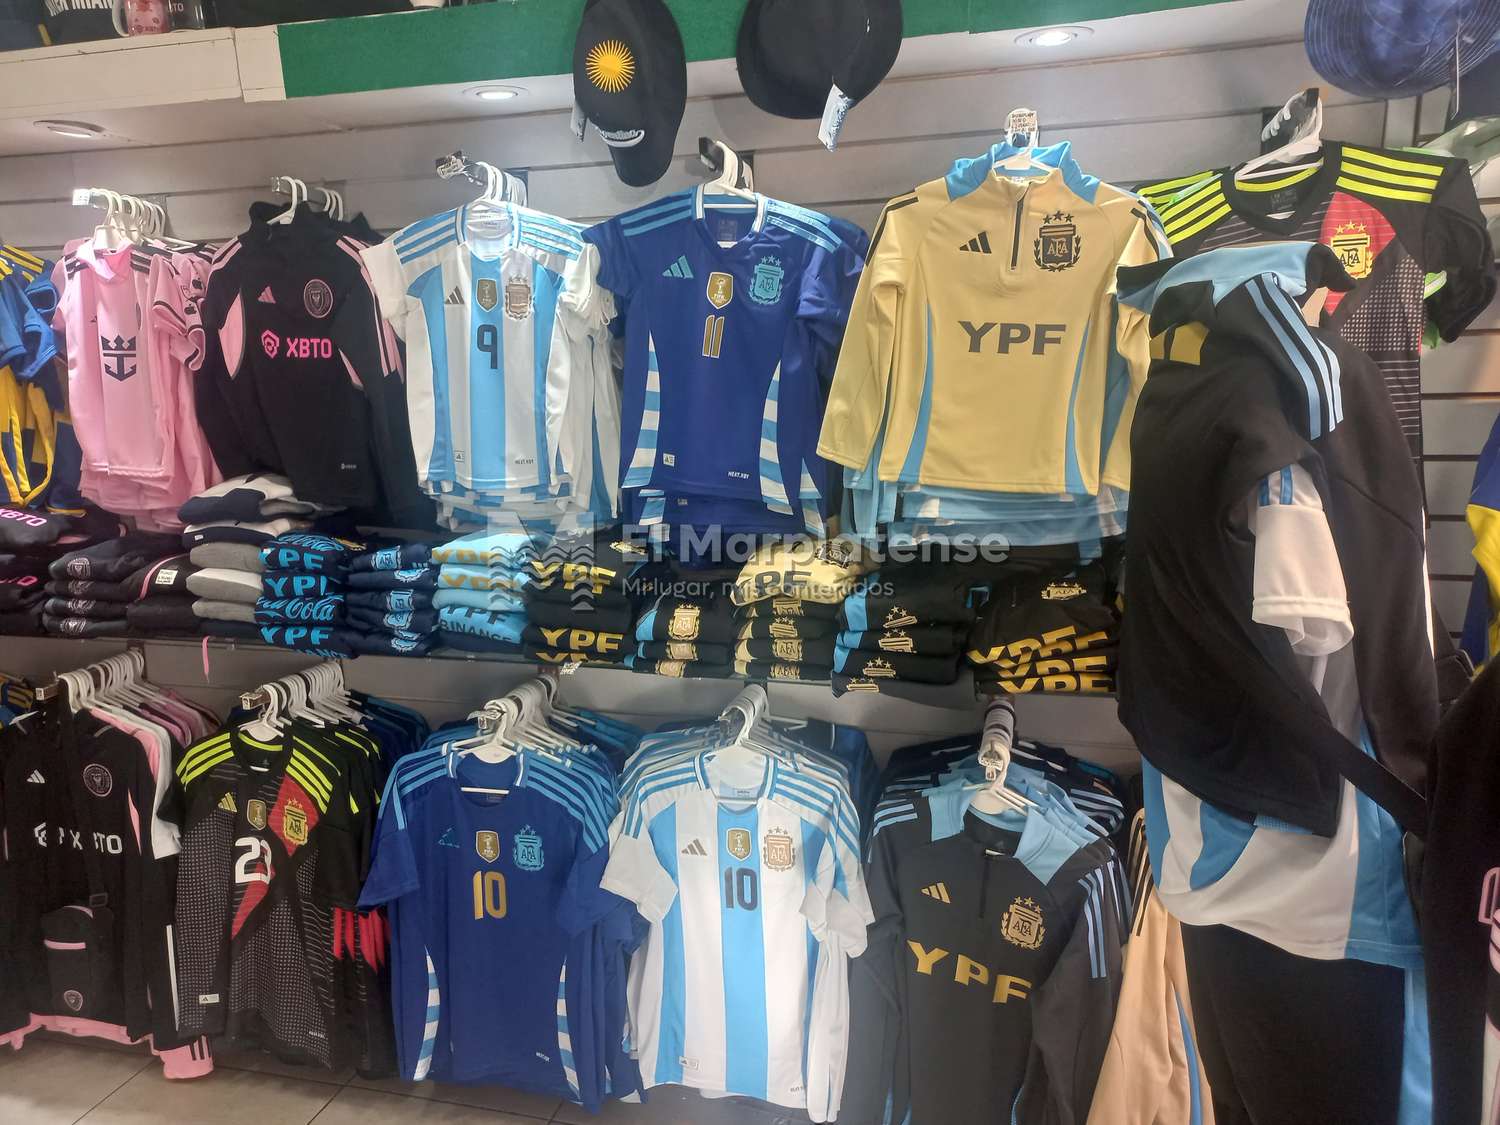 La Copa América causa furor en Mar del Plata